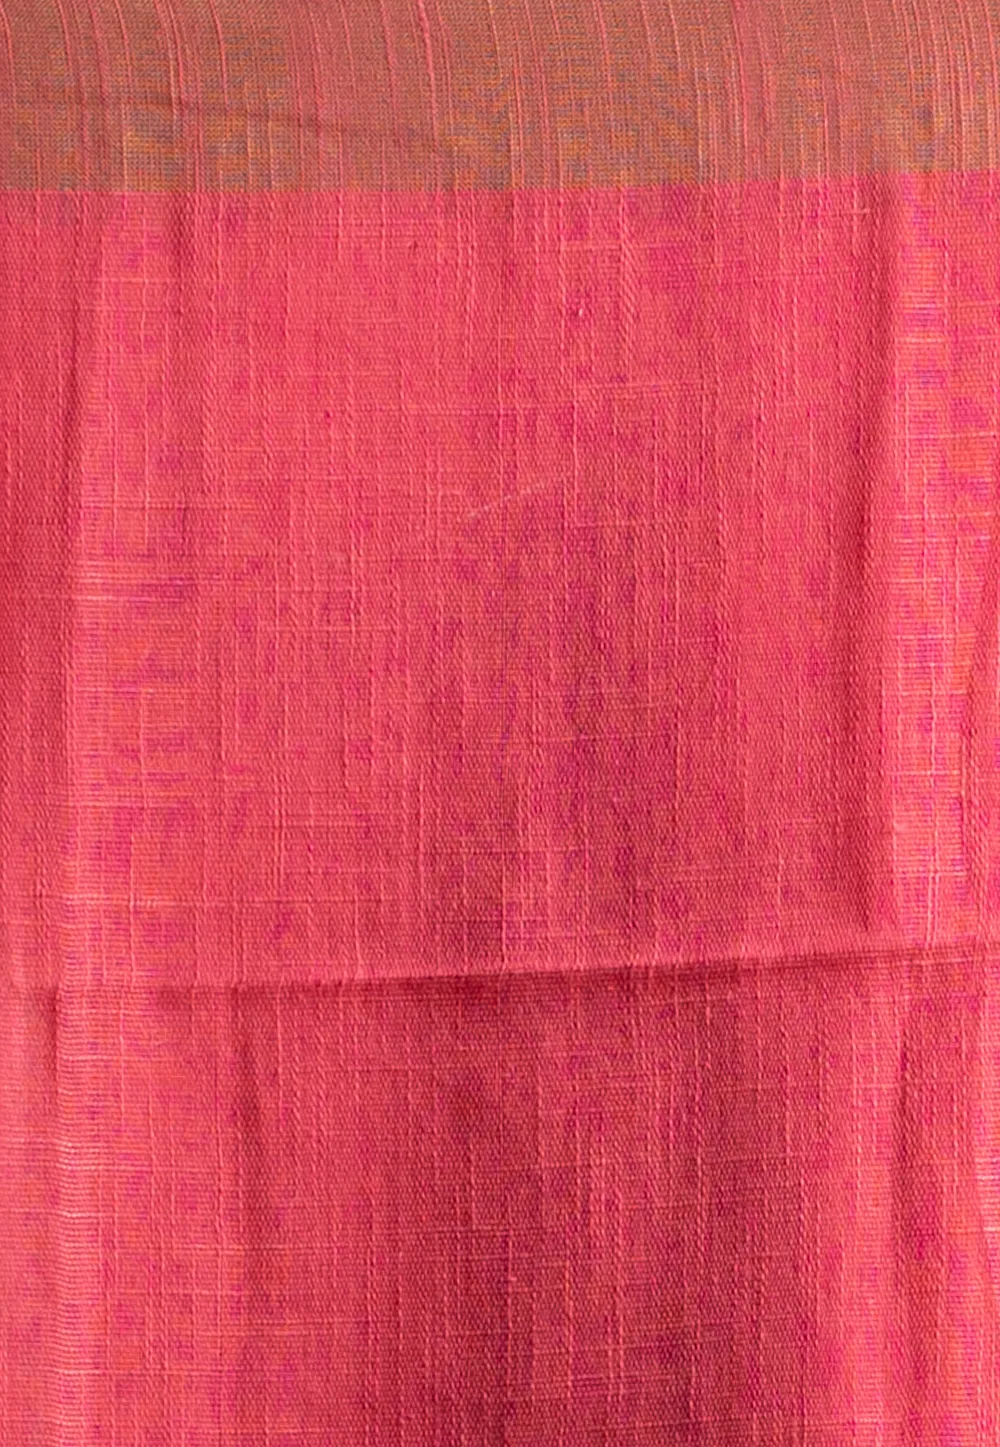 candy pink handloom saree with multicolor pyramid motifs 60236882032ad 1612933250 1